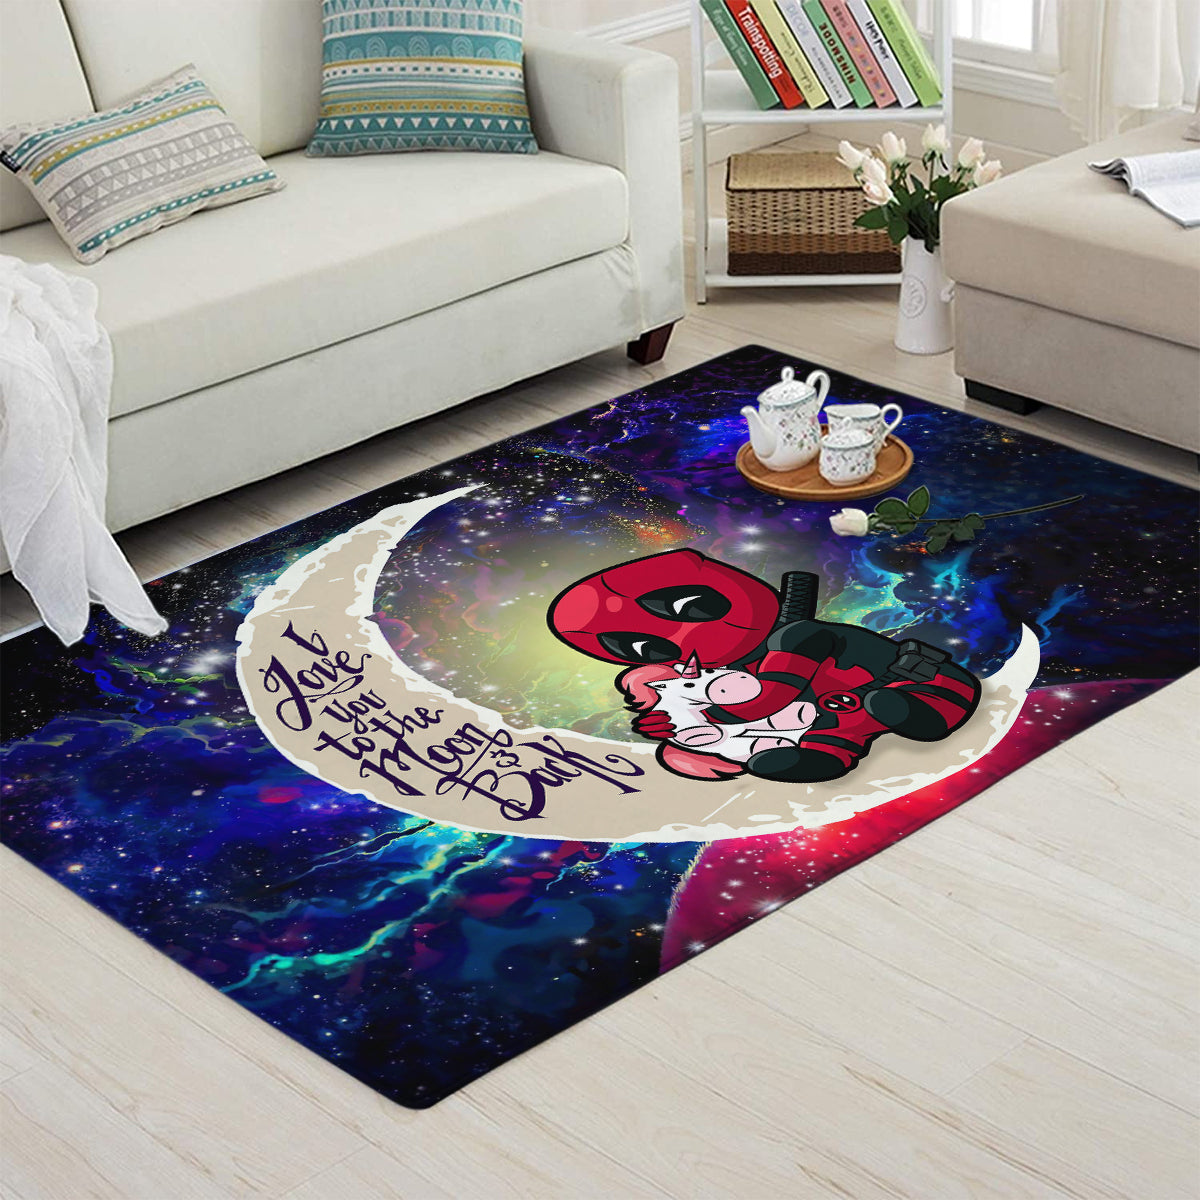 Chibi Deadpool Unicorn Toy Love You To The Moon Galaxy Carpet Rug Home Room Decor